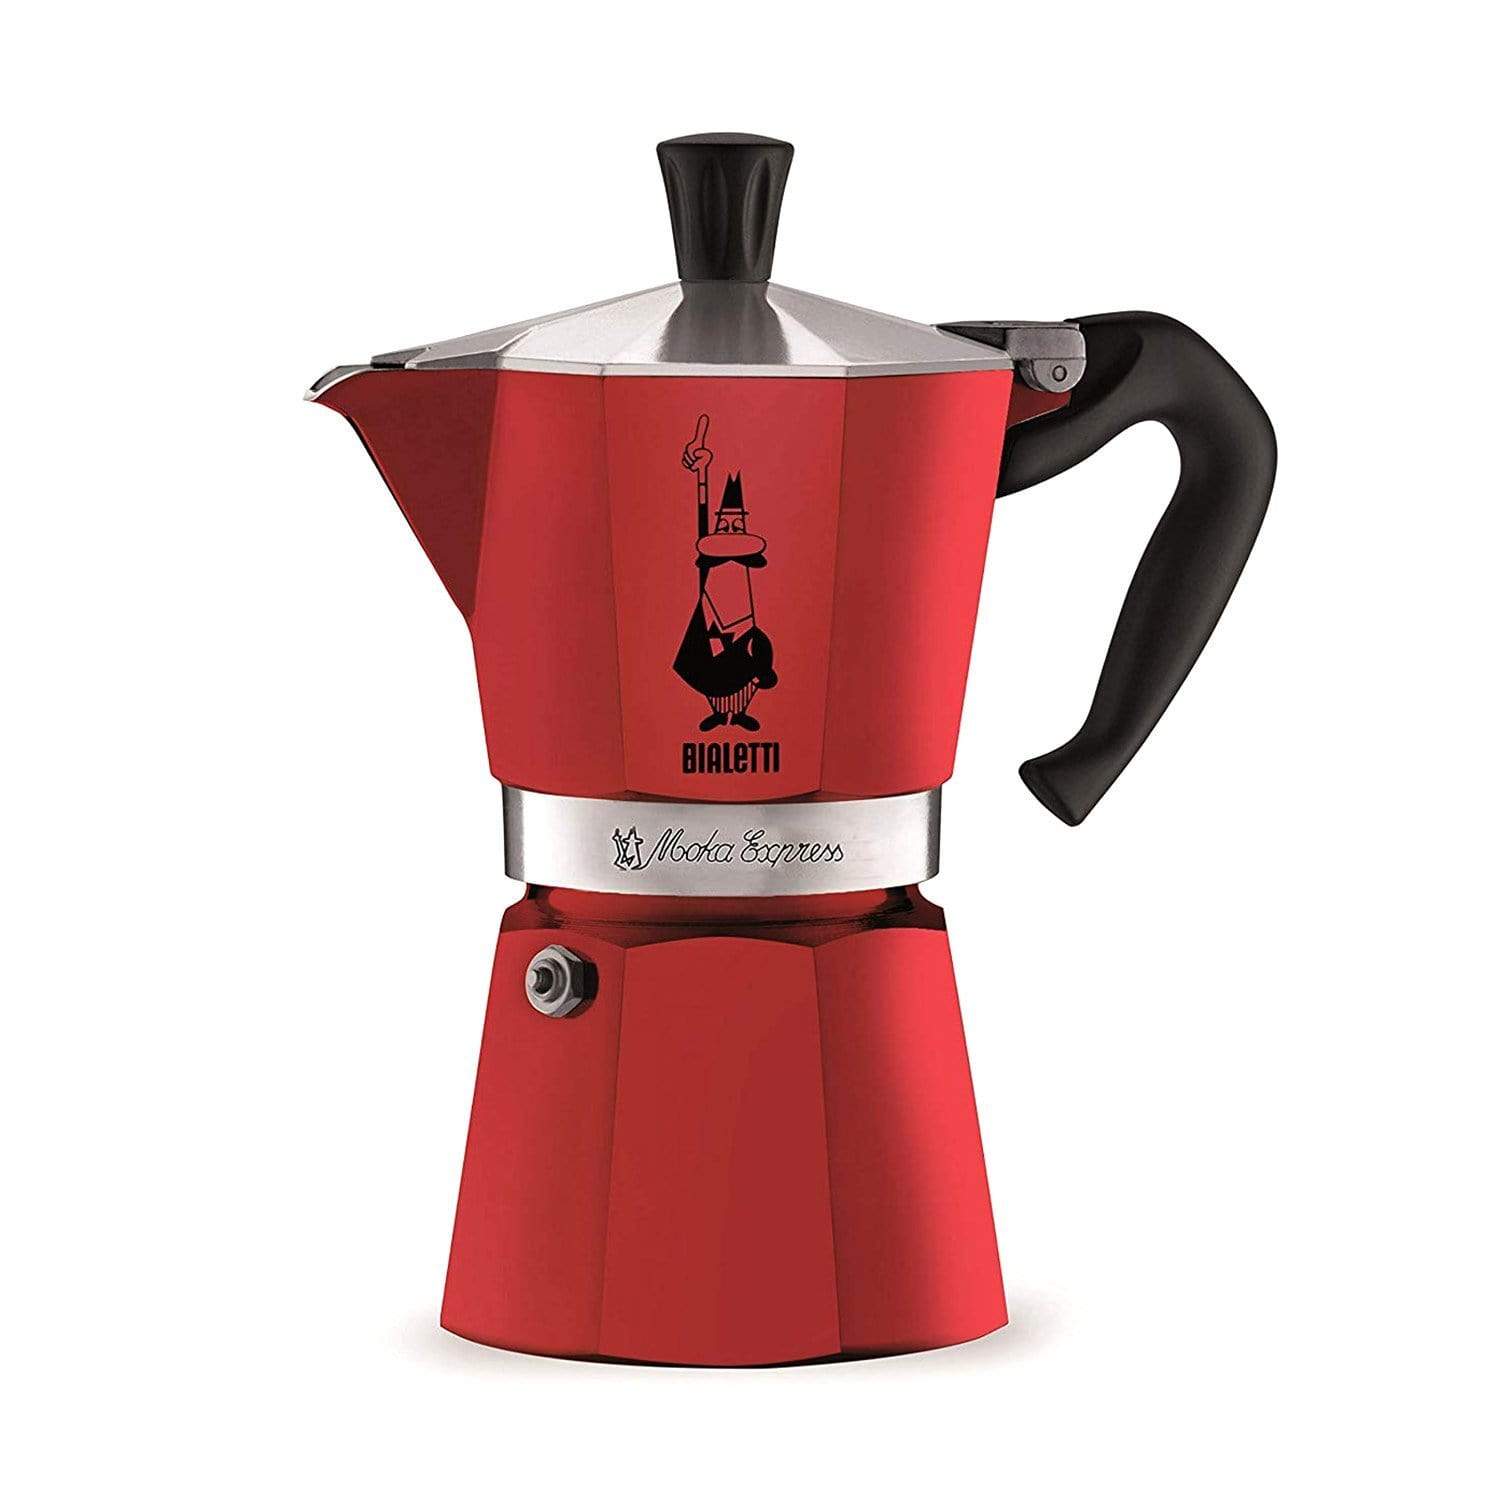 Bialetti Moka Express Coffee Maker - Red , 6 Cups - 4943 - Jashanmal Home